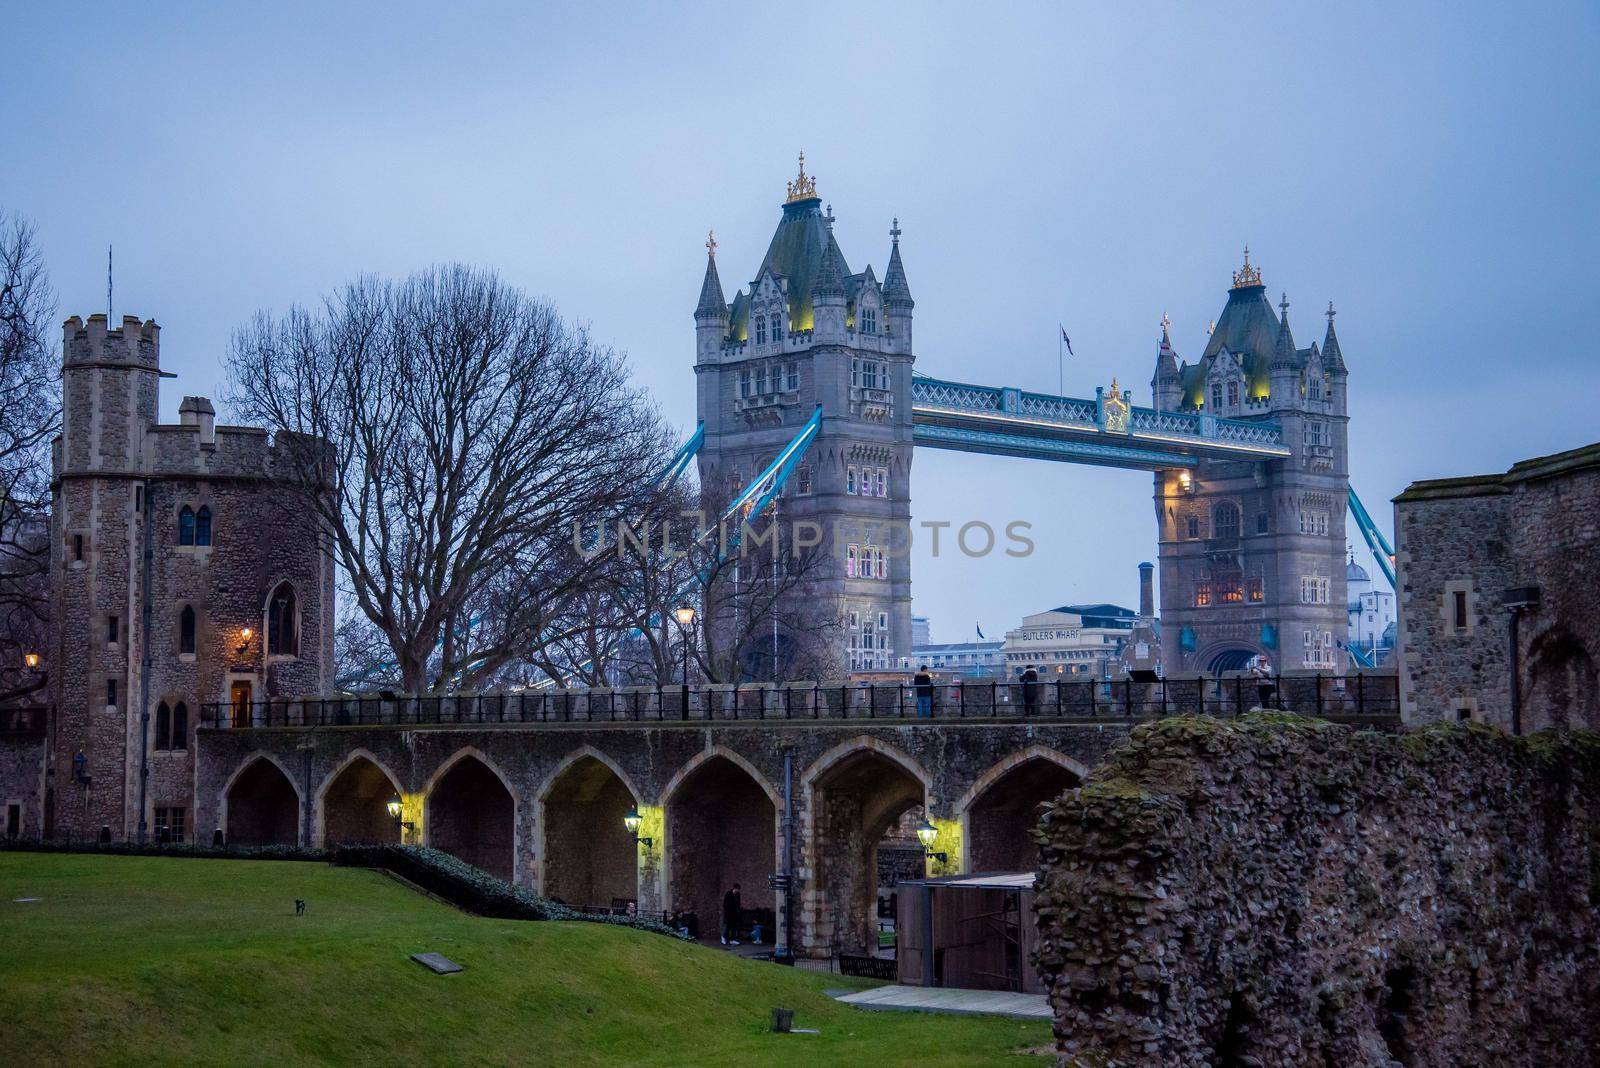 London, UK - January 26, 2017: Iconic Tower Bridge from the Tower of London castle vantage point London UK landmarks